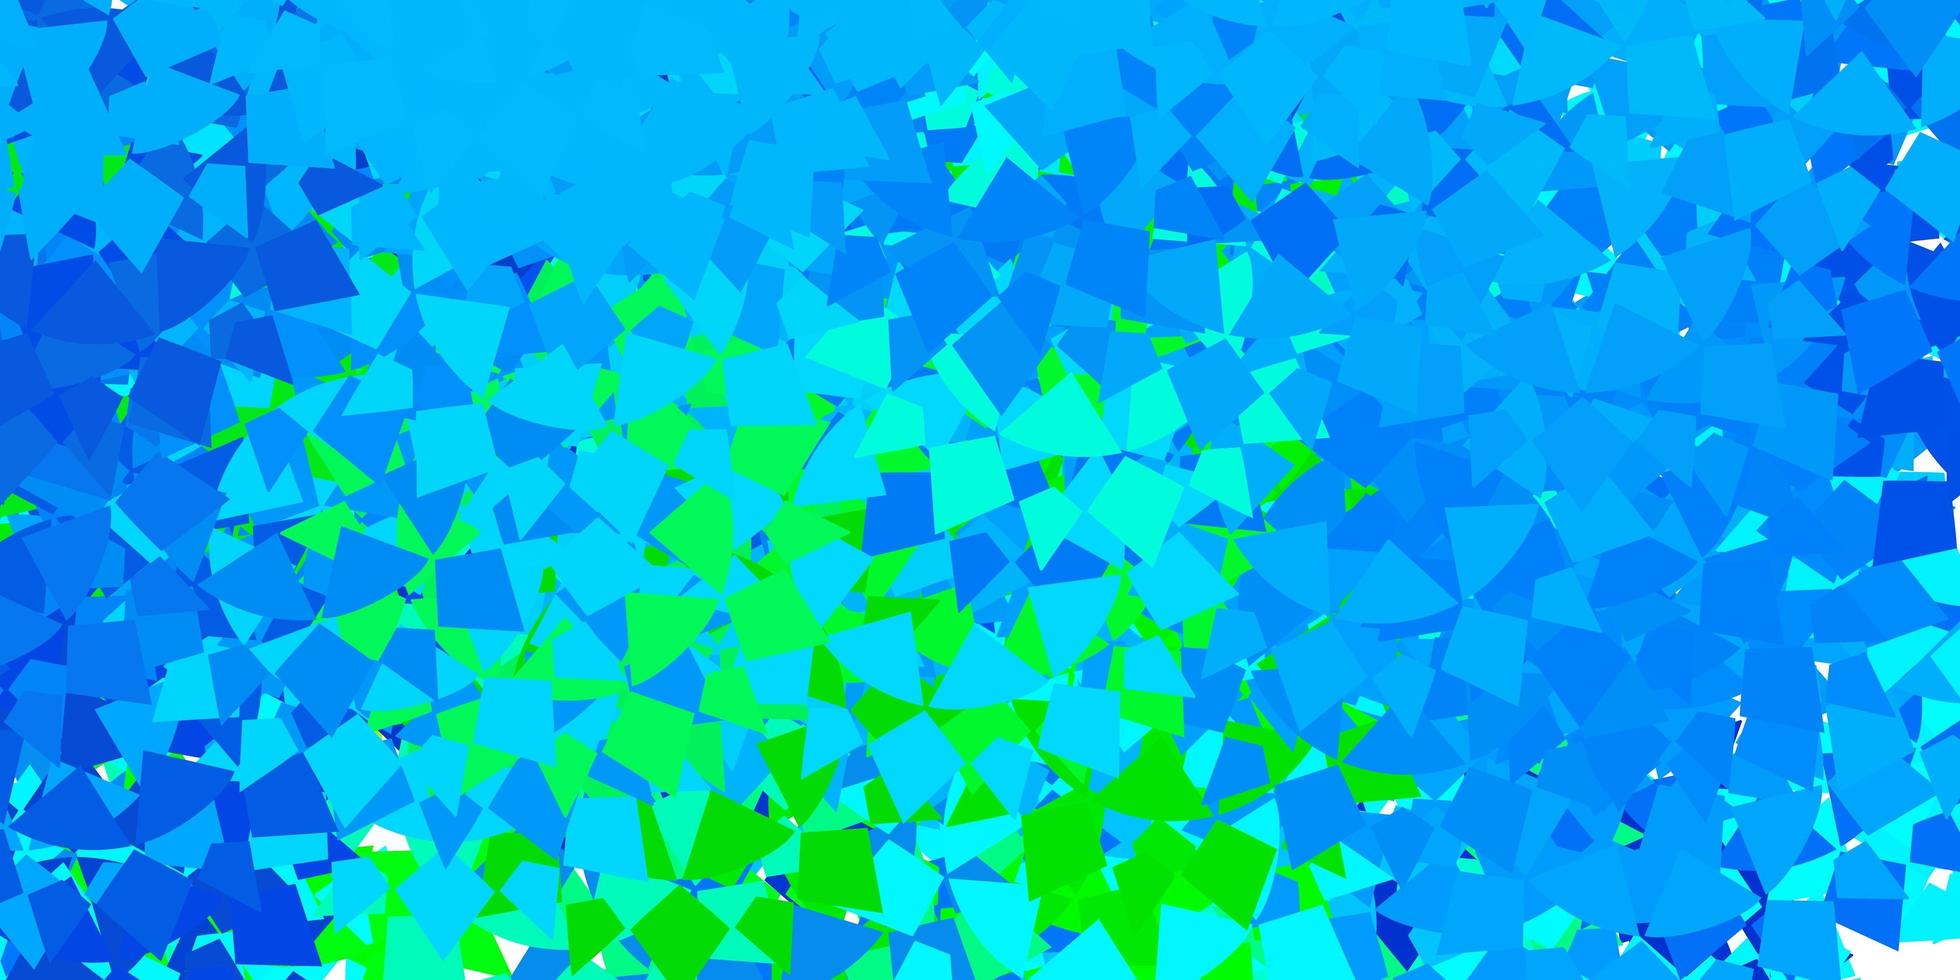 Fondo de vector verde azul oscuro con formas poligonales